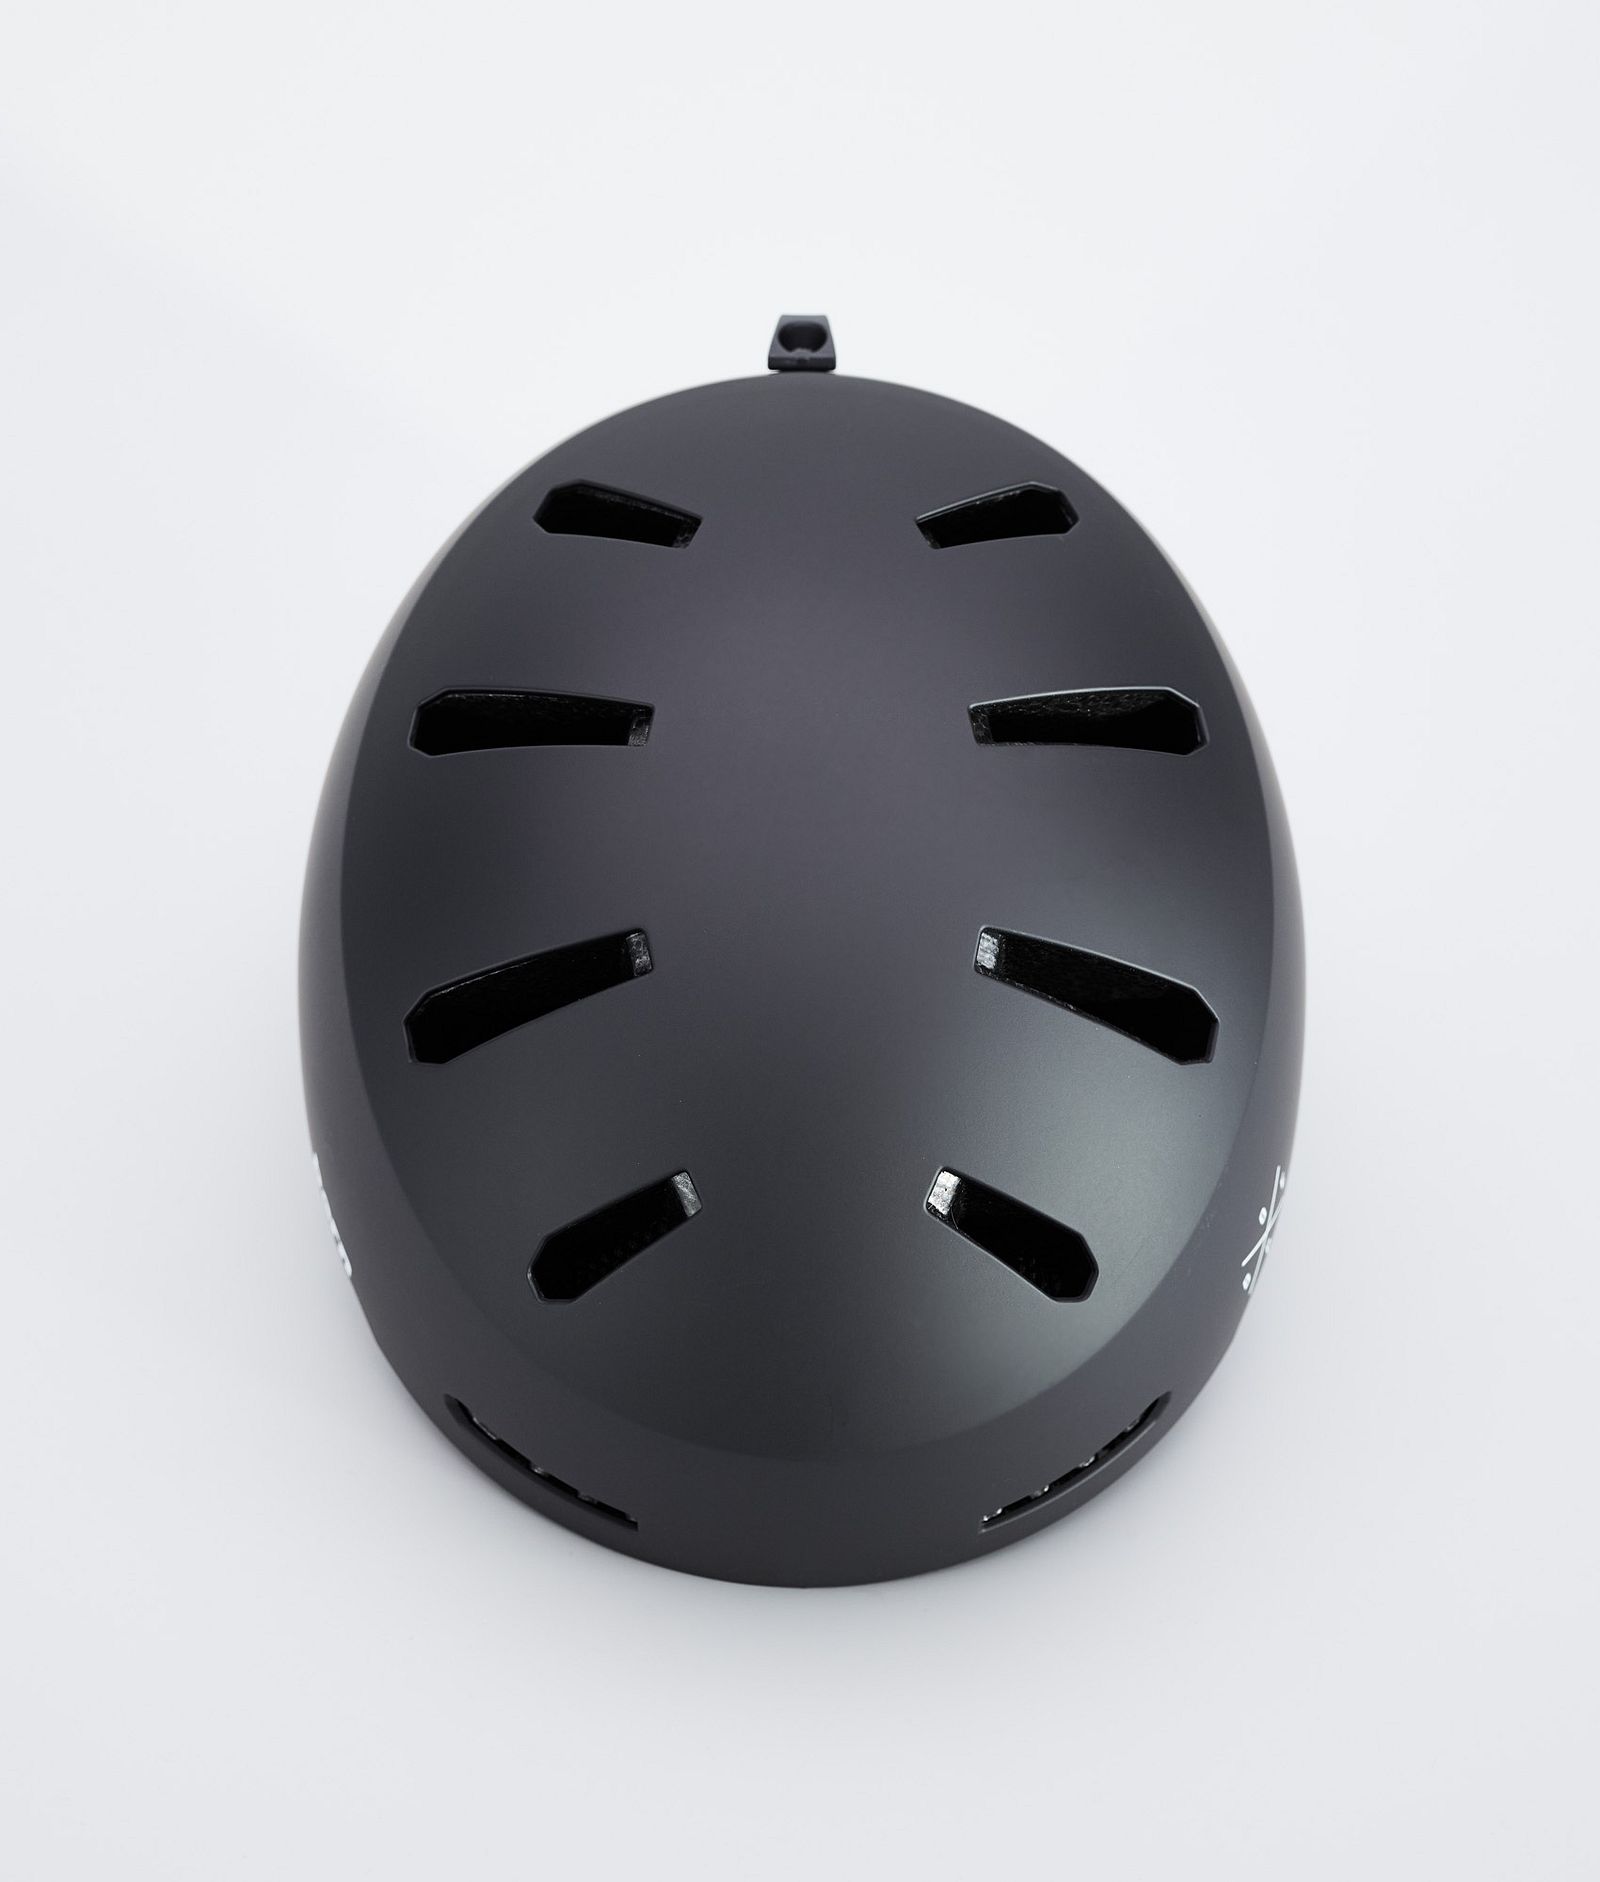 Macon 2.0 スキーヘルメット X-Up Matte Black w/ Black